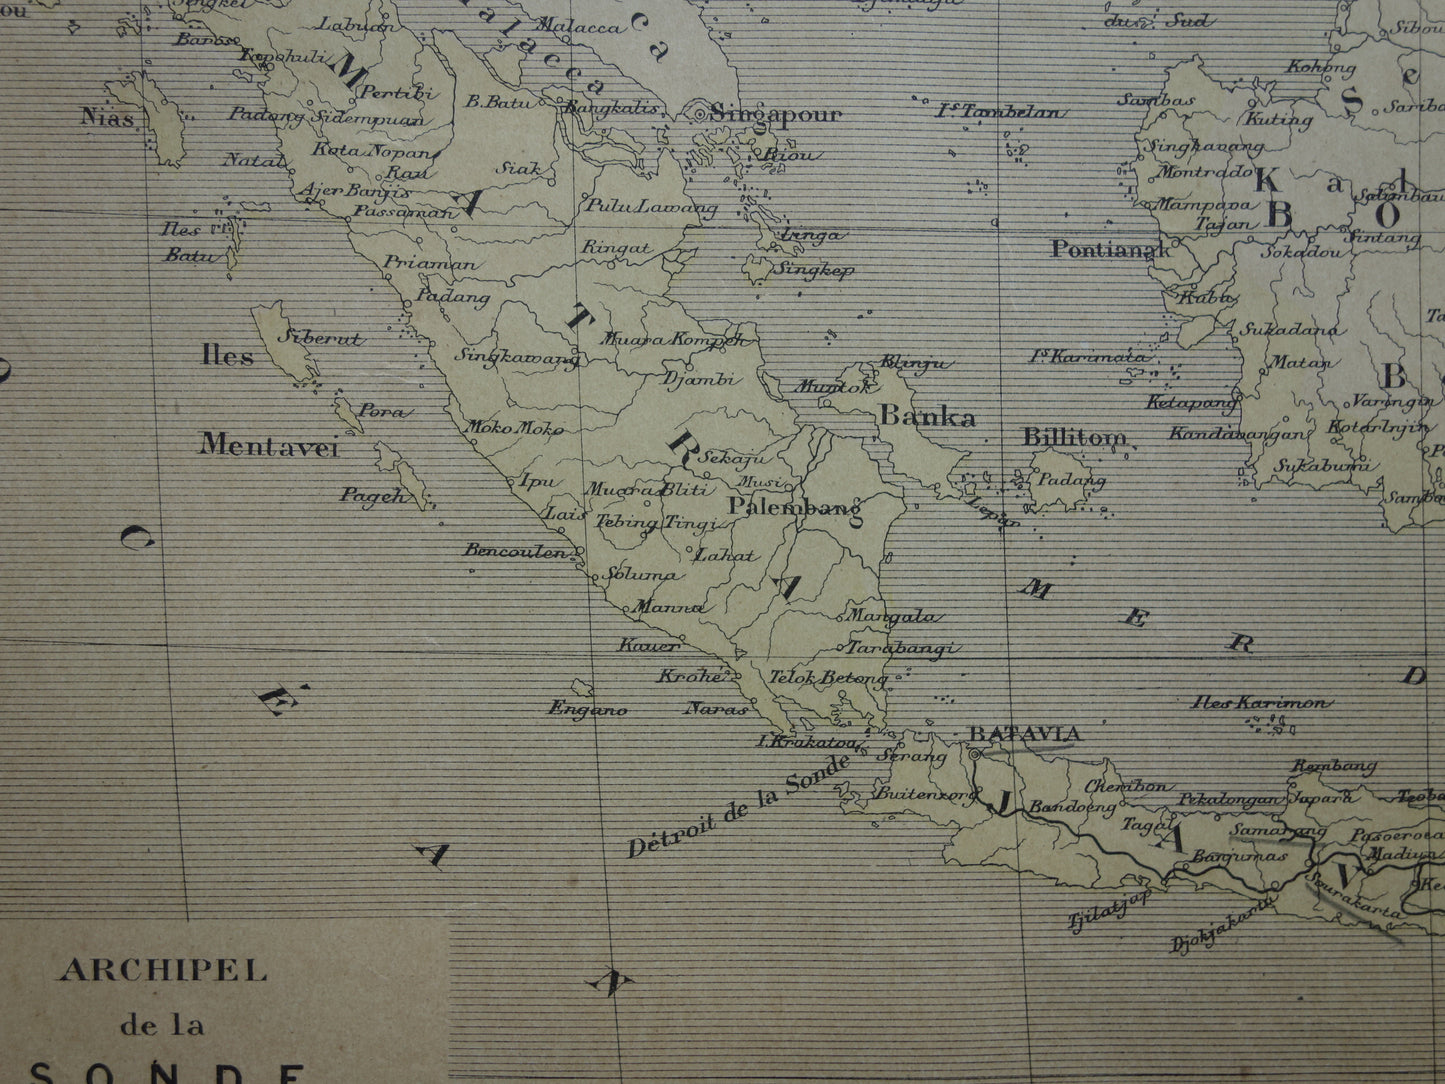 INDONESIE oude kaart van Indonesië 1896 originele antieke Franse handgekleurde landkaart Java Batavia Sumatra